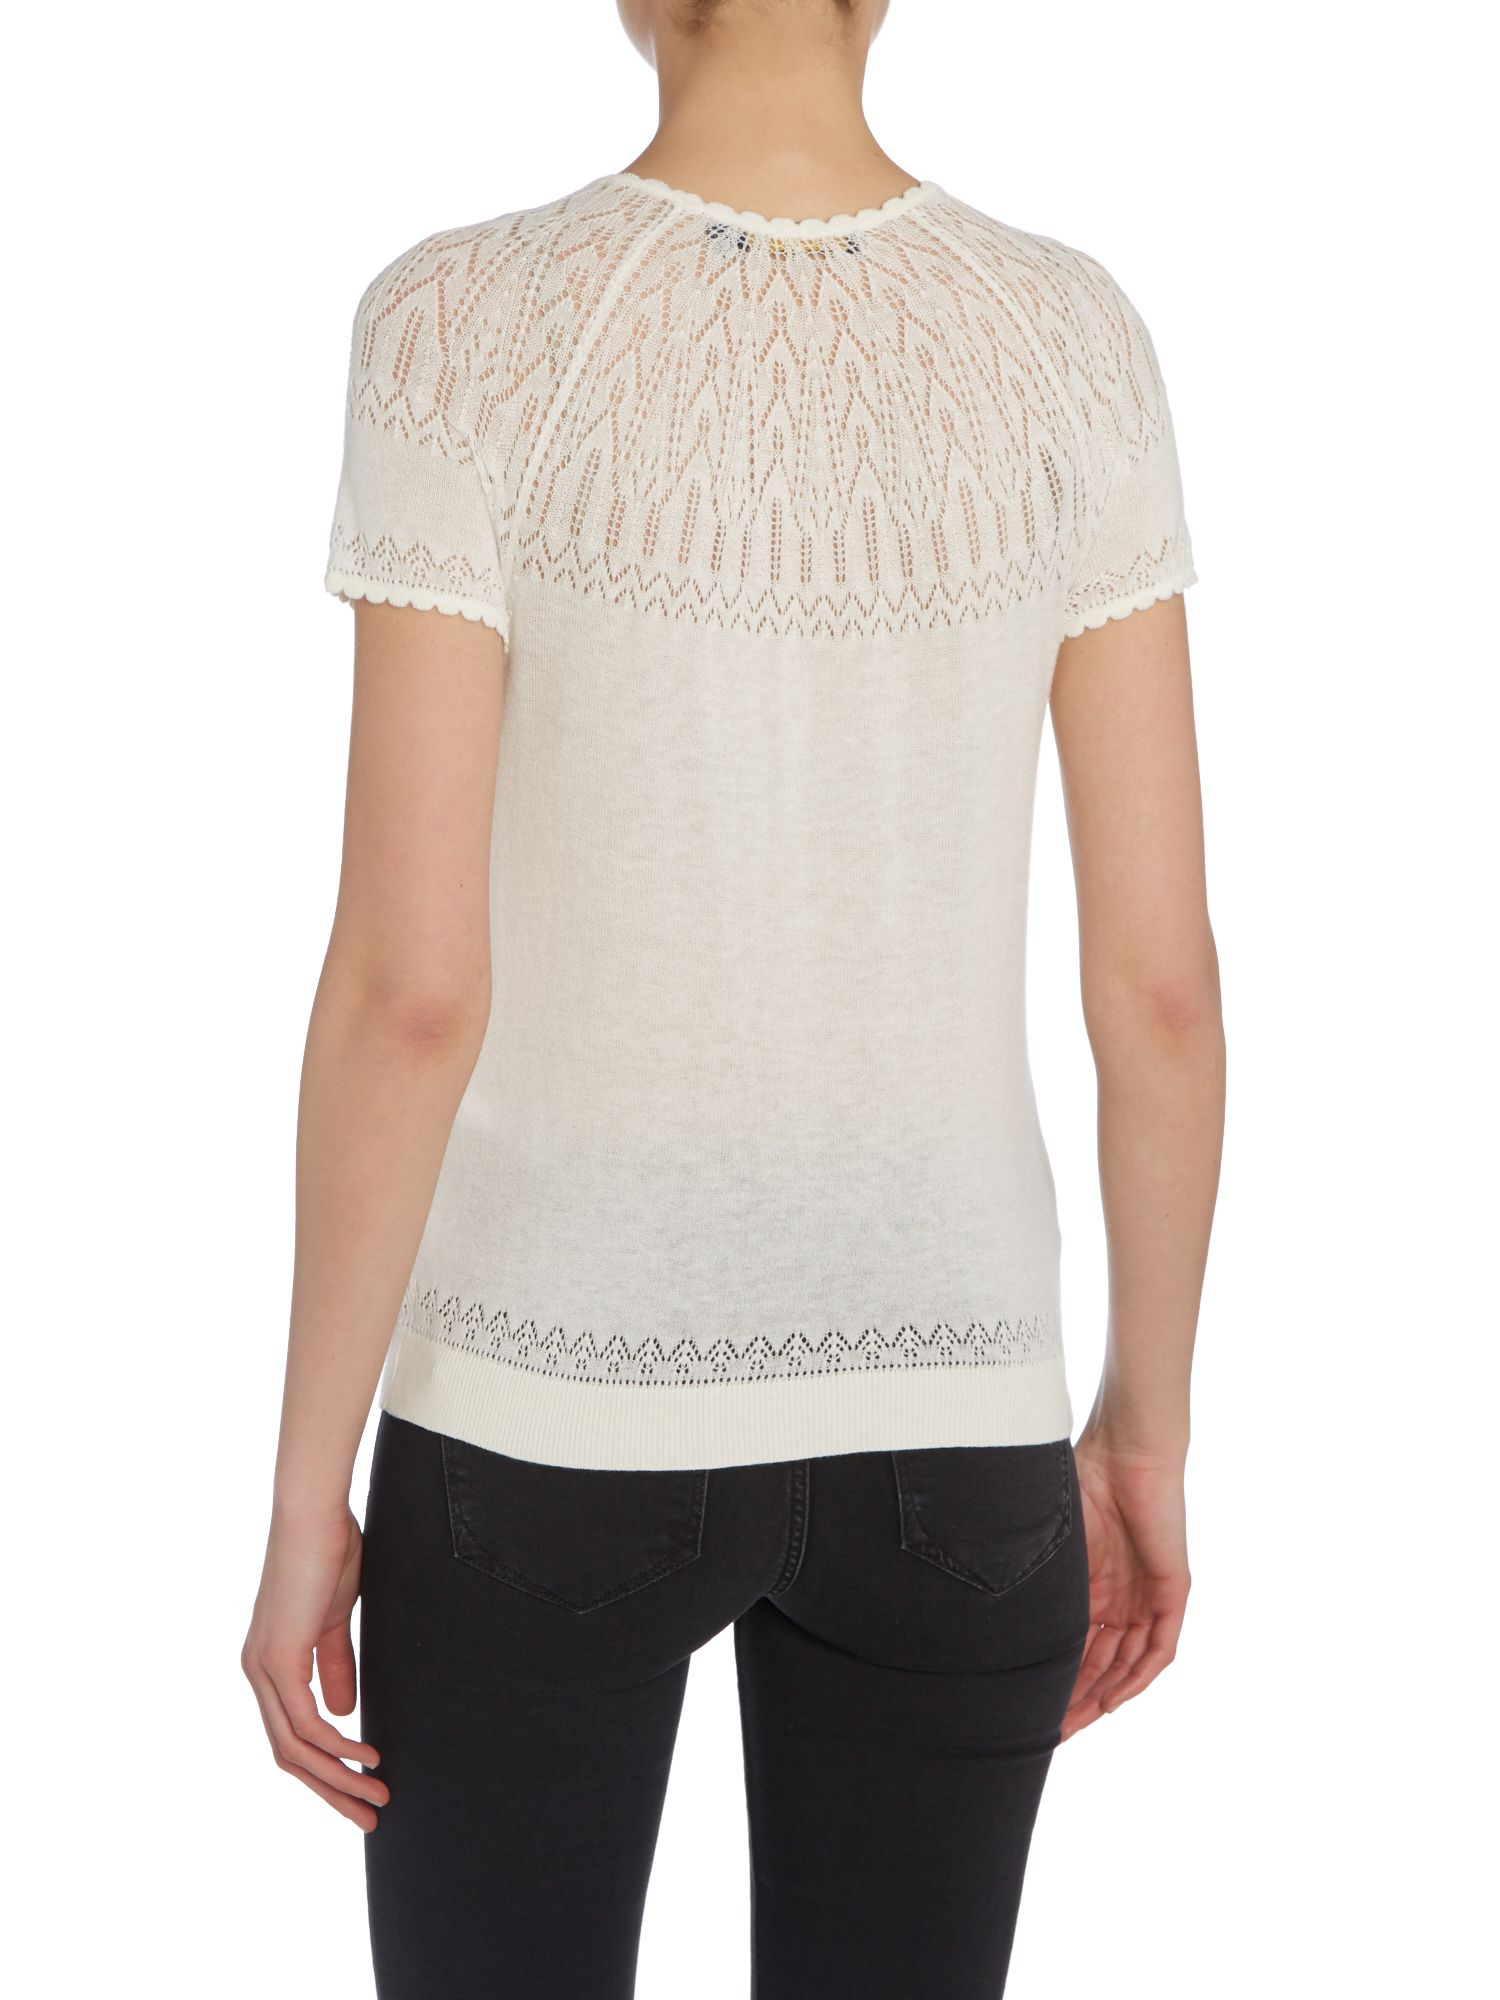 Polo ralph lauren Short Sleeve Knitted Sweater in Beige (Cream) | Lyst